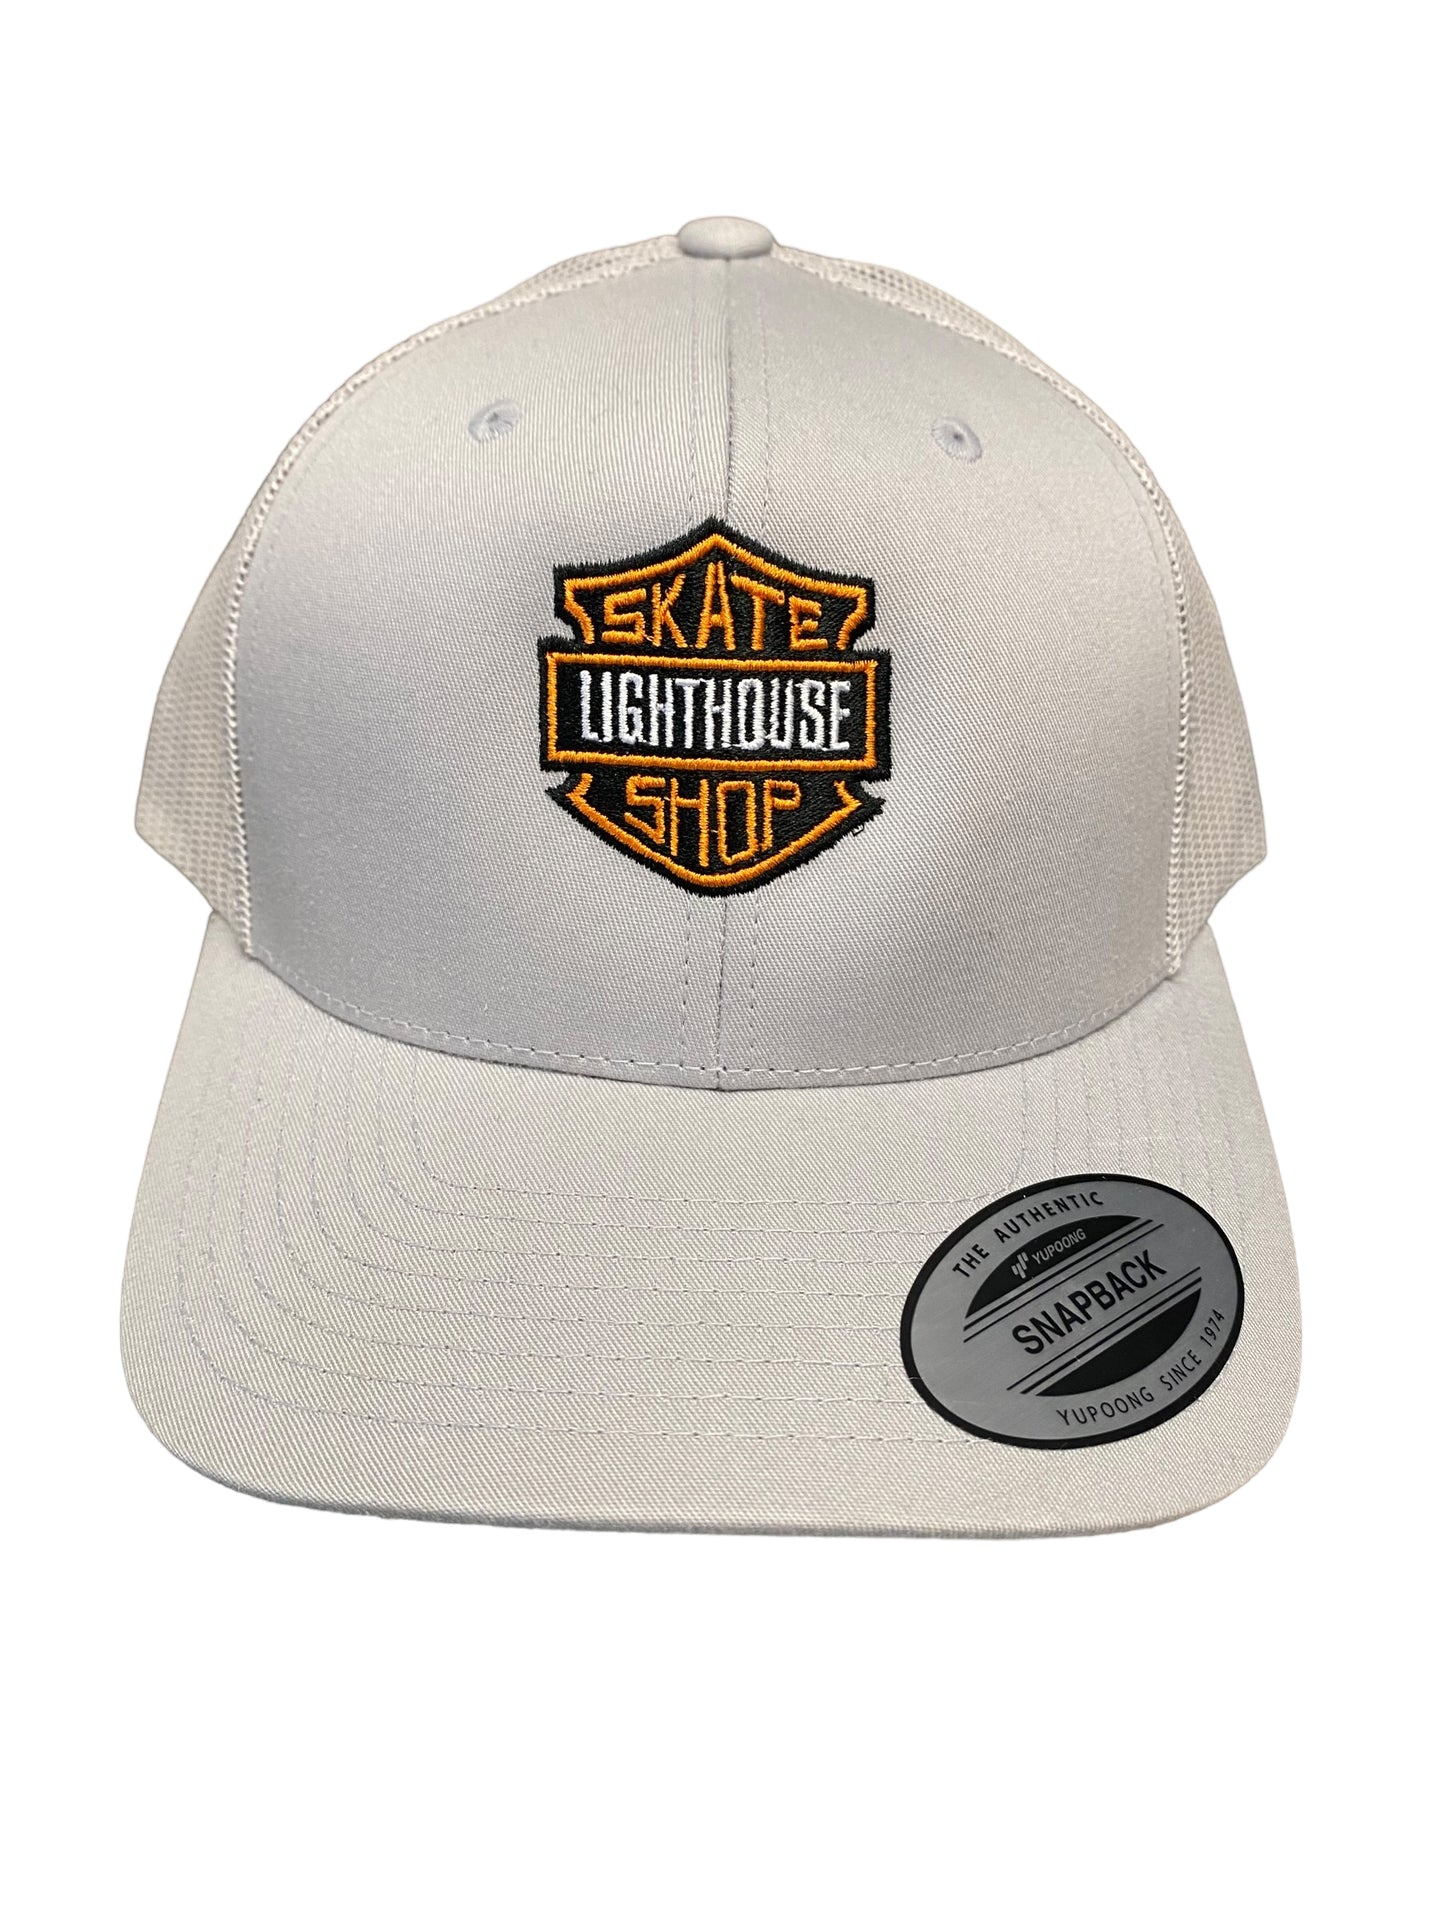 Lighthouse Harley Hat